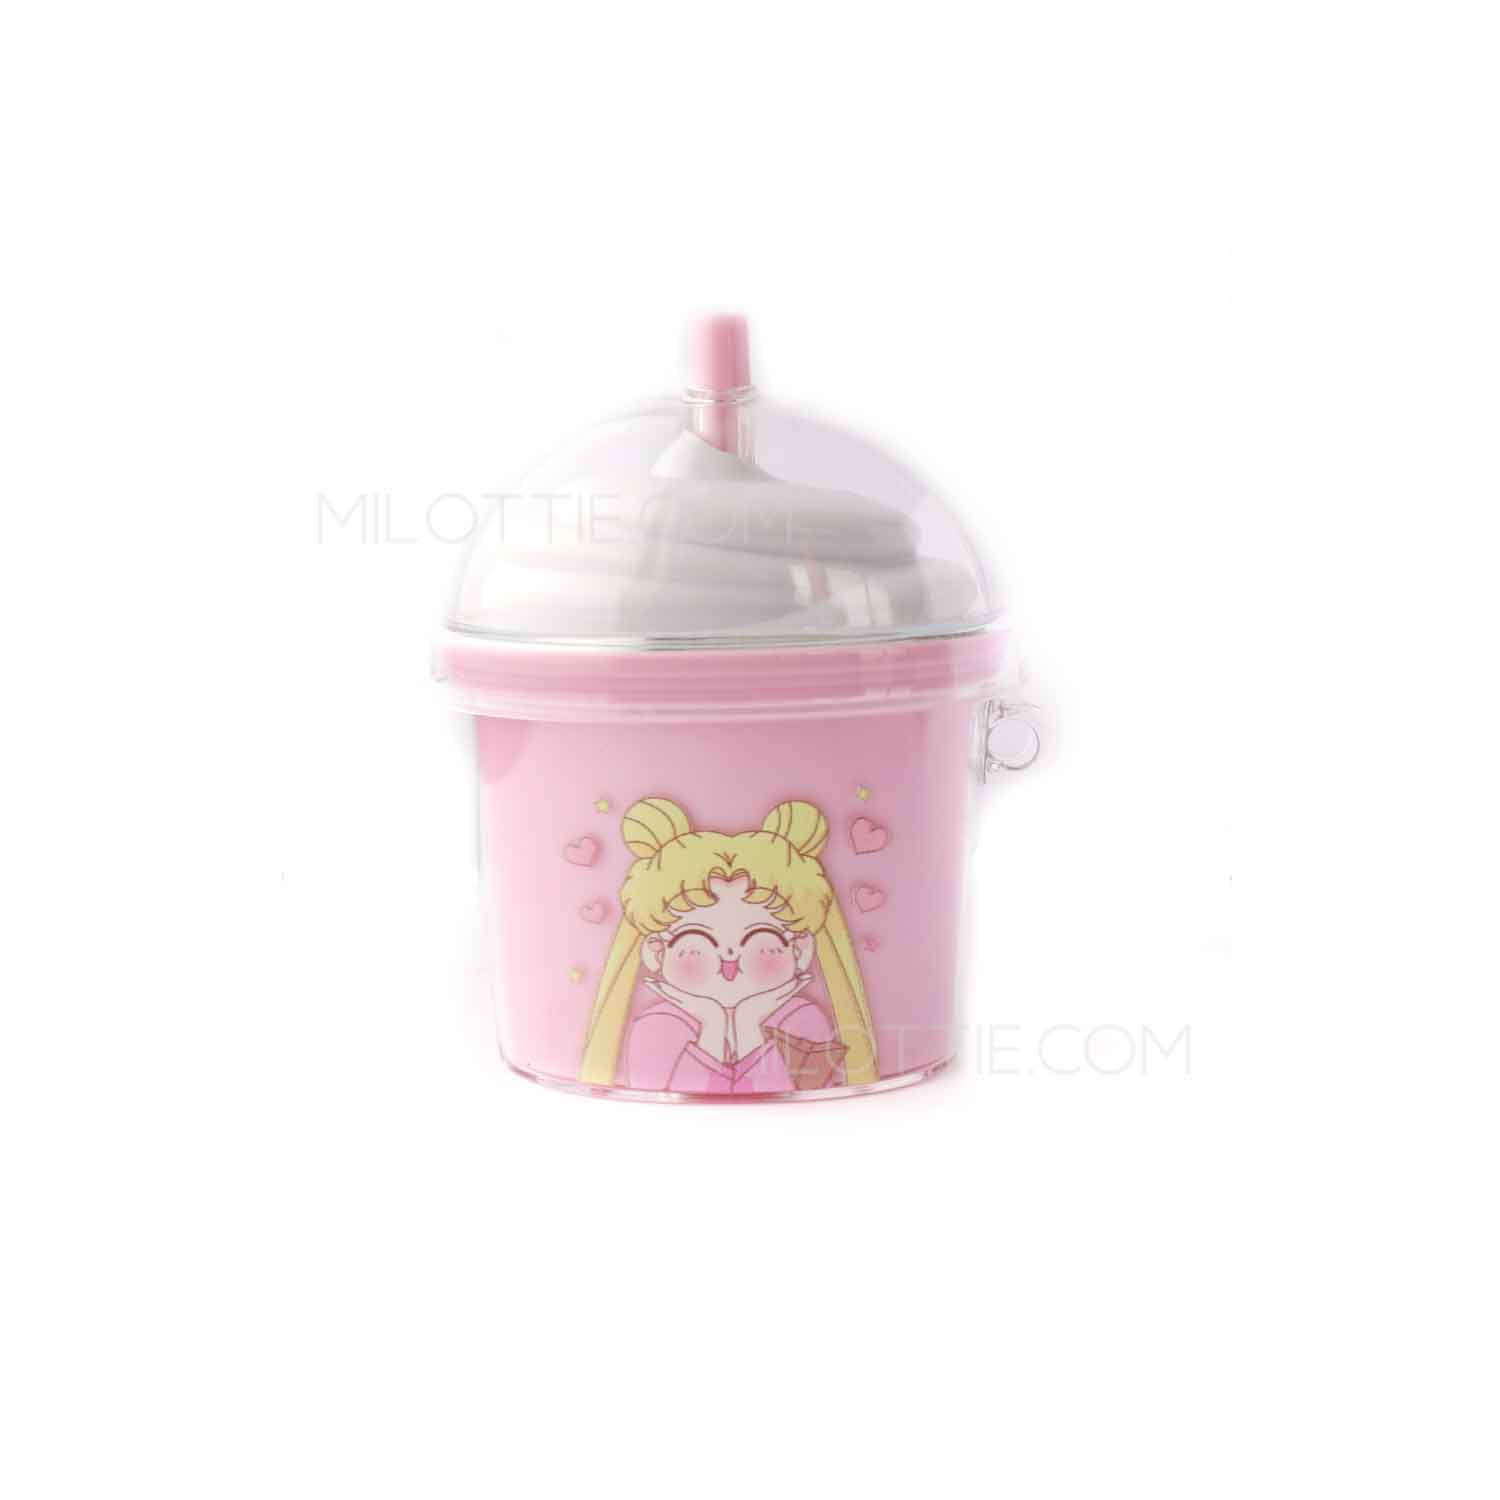 Sailor Moon Drink Cup Tea Airpods Case